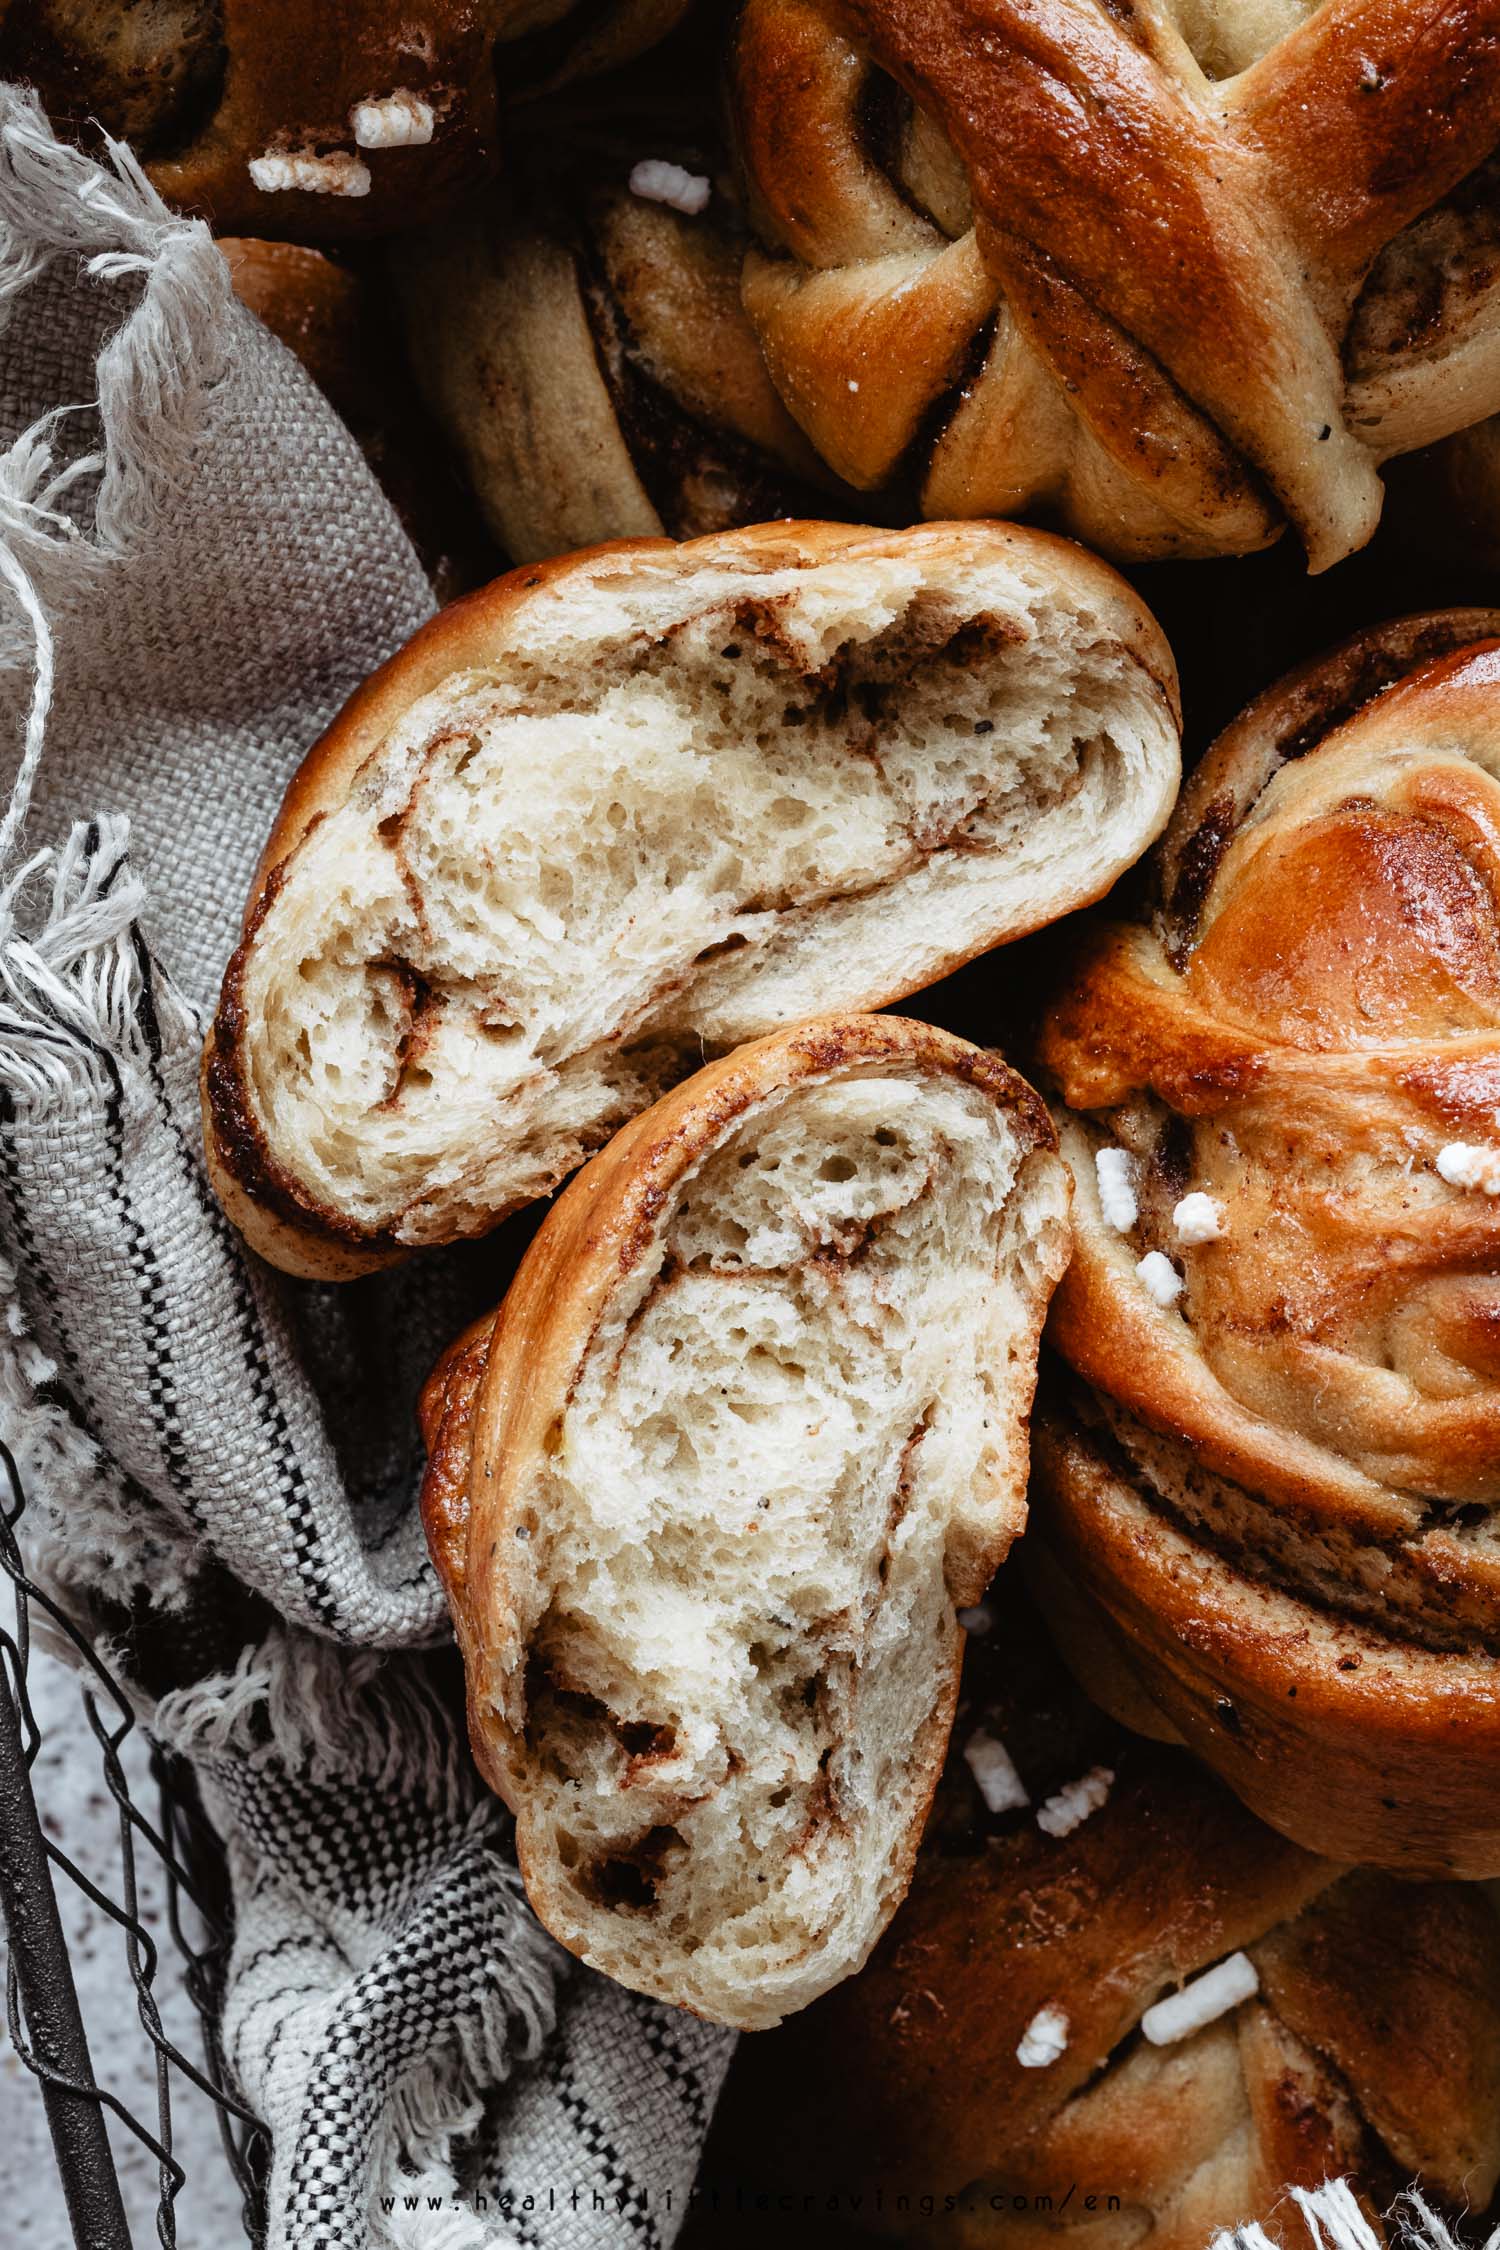 The inside of a cardamom cinnamon Swedish bun: fluffy and delicious